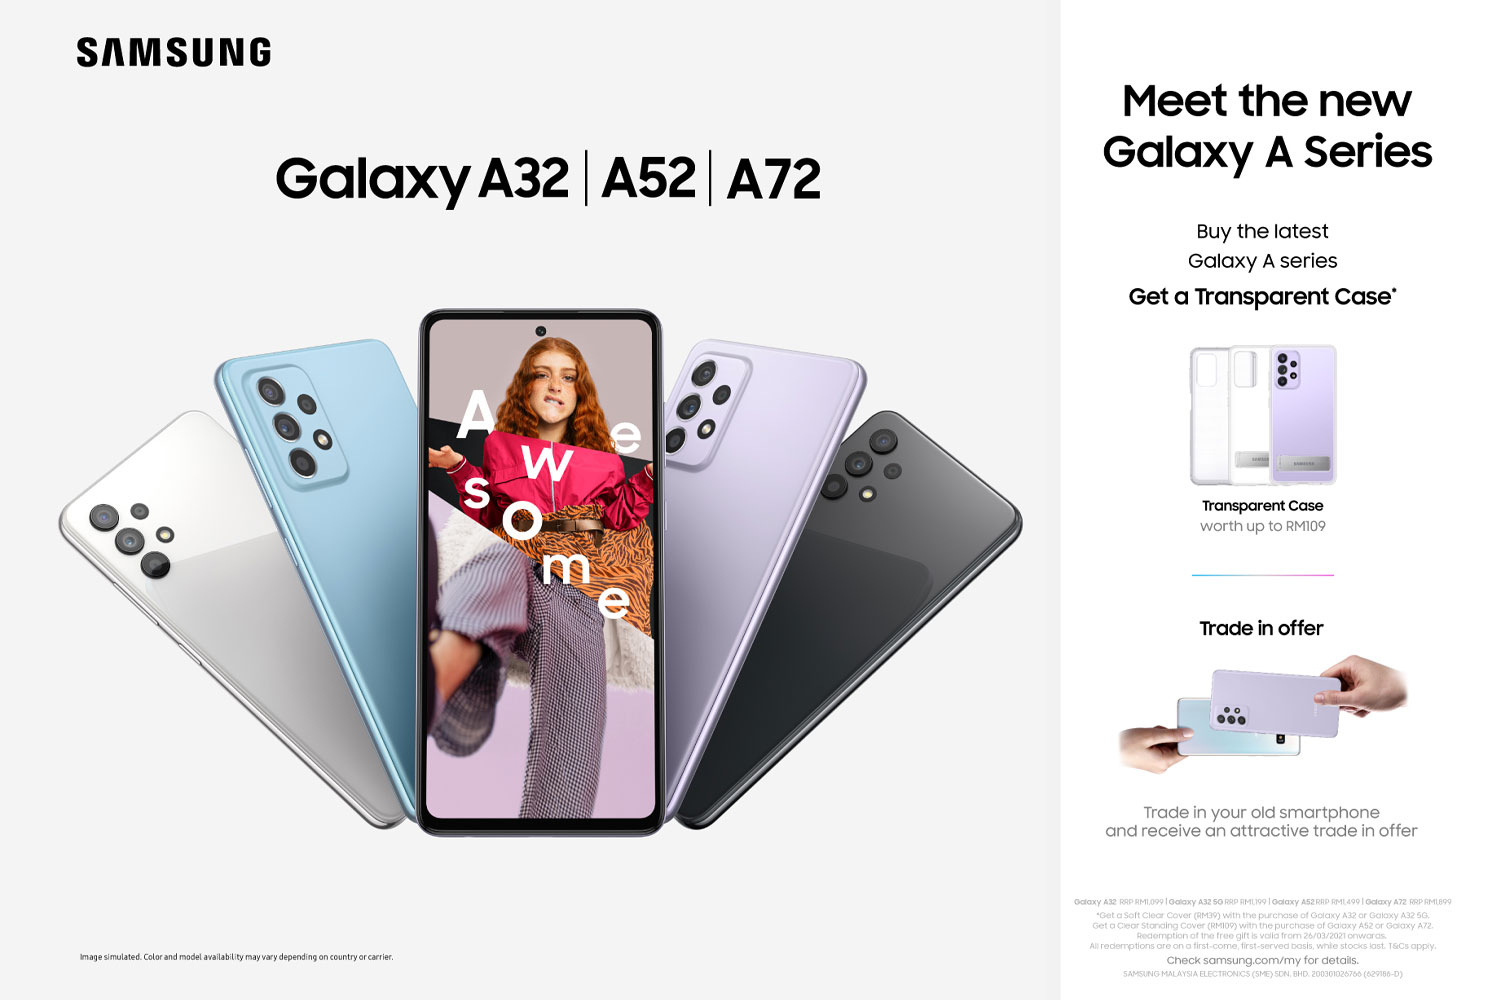 Samsung Galaxy A32, A52, and A72 Malaysia